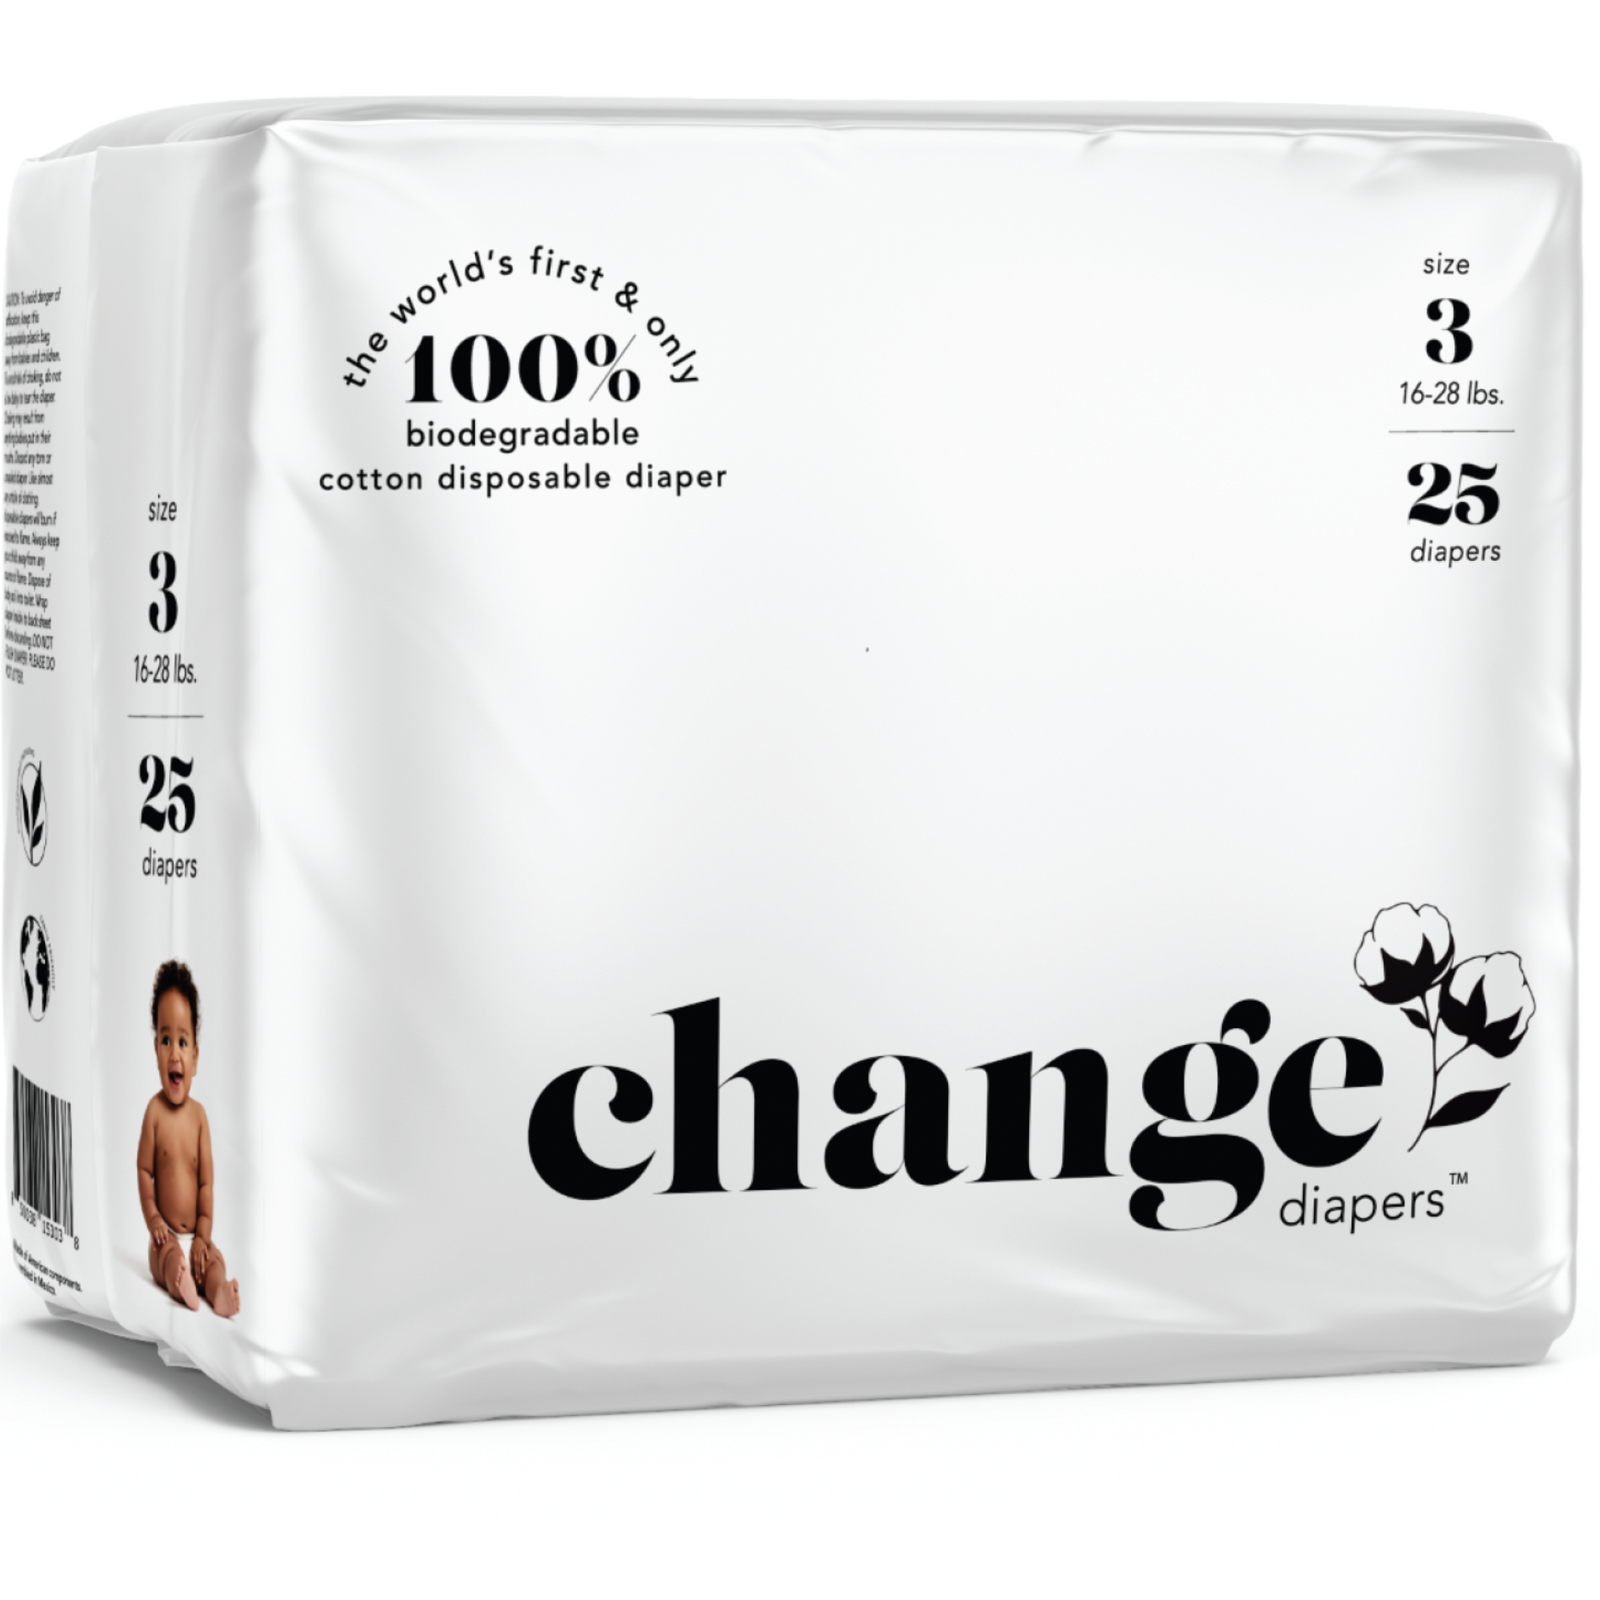 change diapers sleeve of diaper packaging.